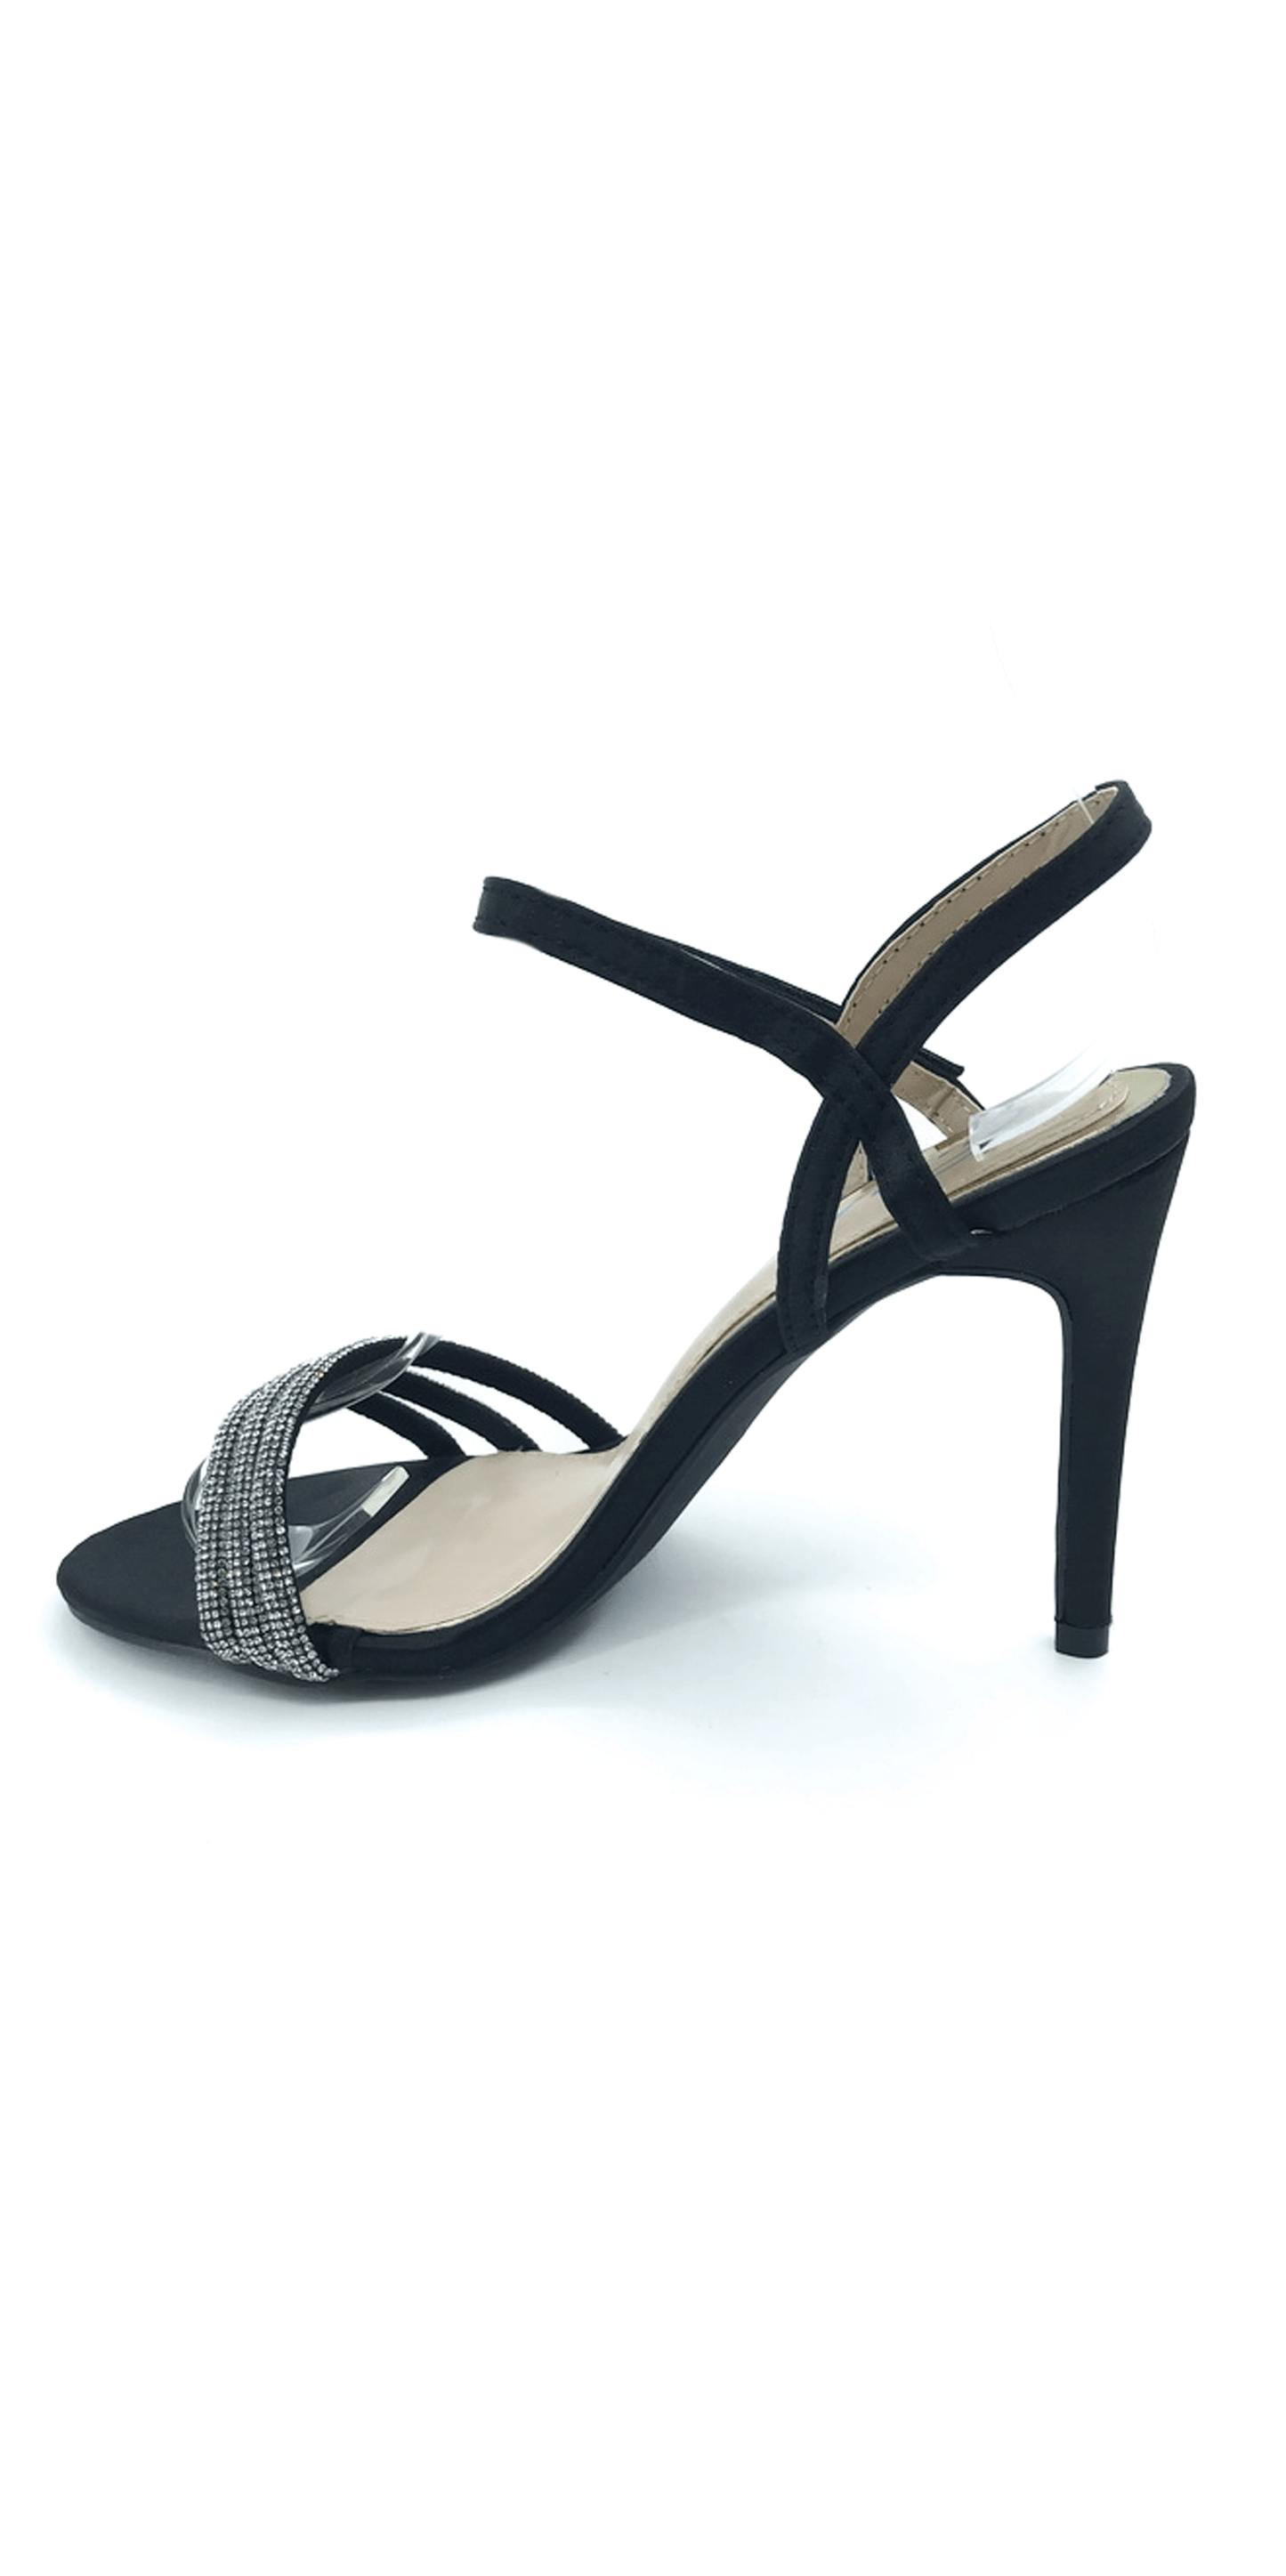 Camille La Vie Rhinestone Strappy High Heel Stiletto Sandal